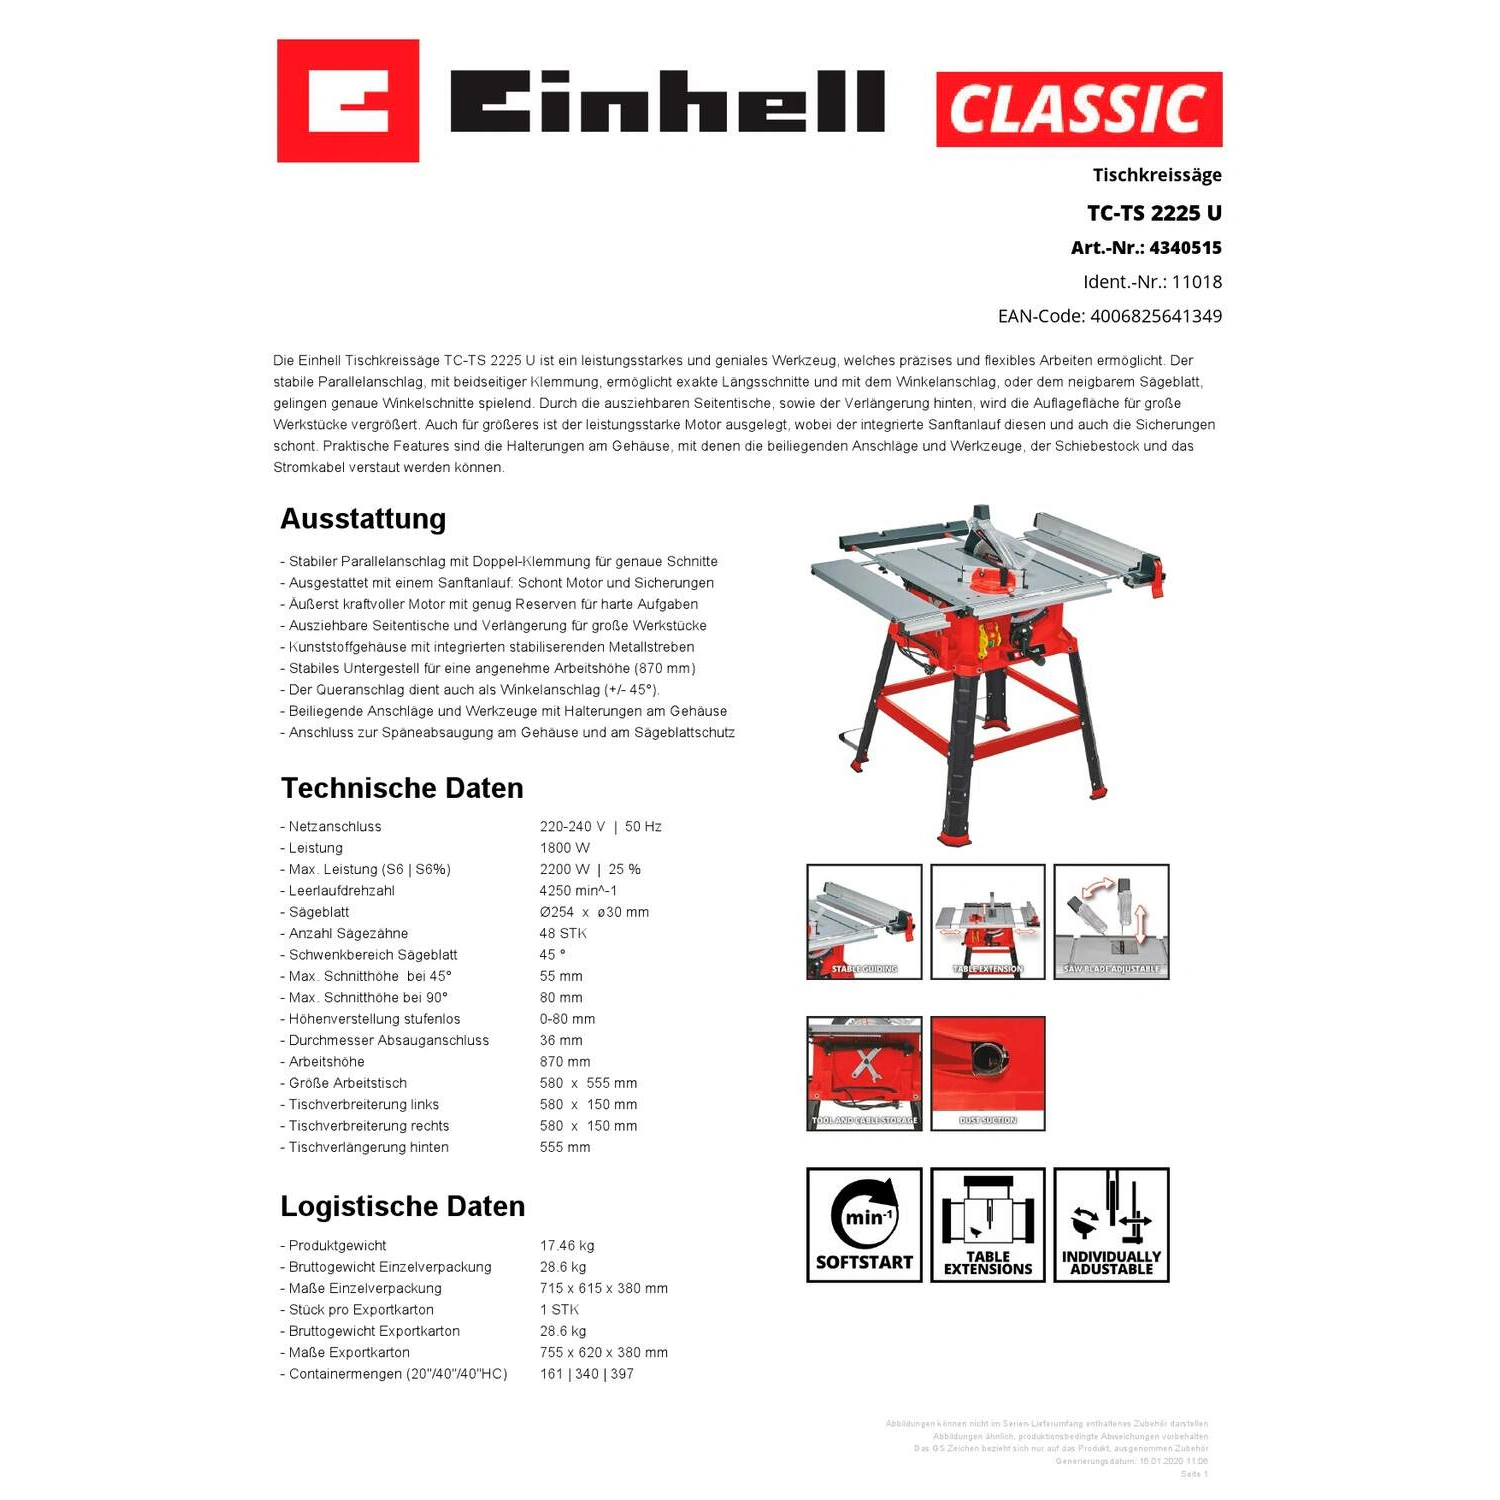 EINHELL Tischkreissäge »Einhell Classic«, 1800 W, Ø-Sägeblatt: 254 mm